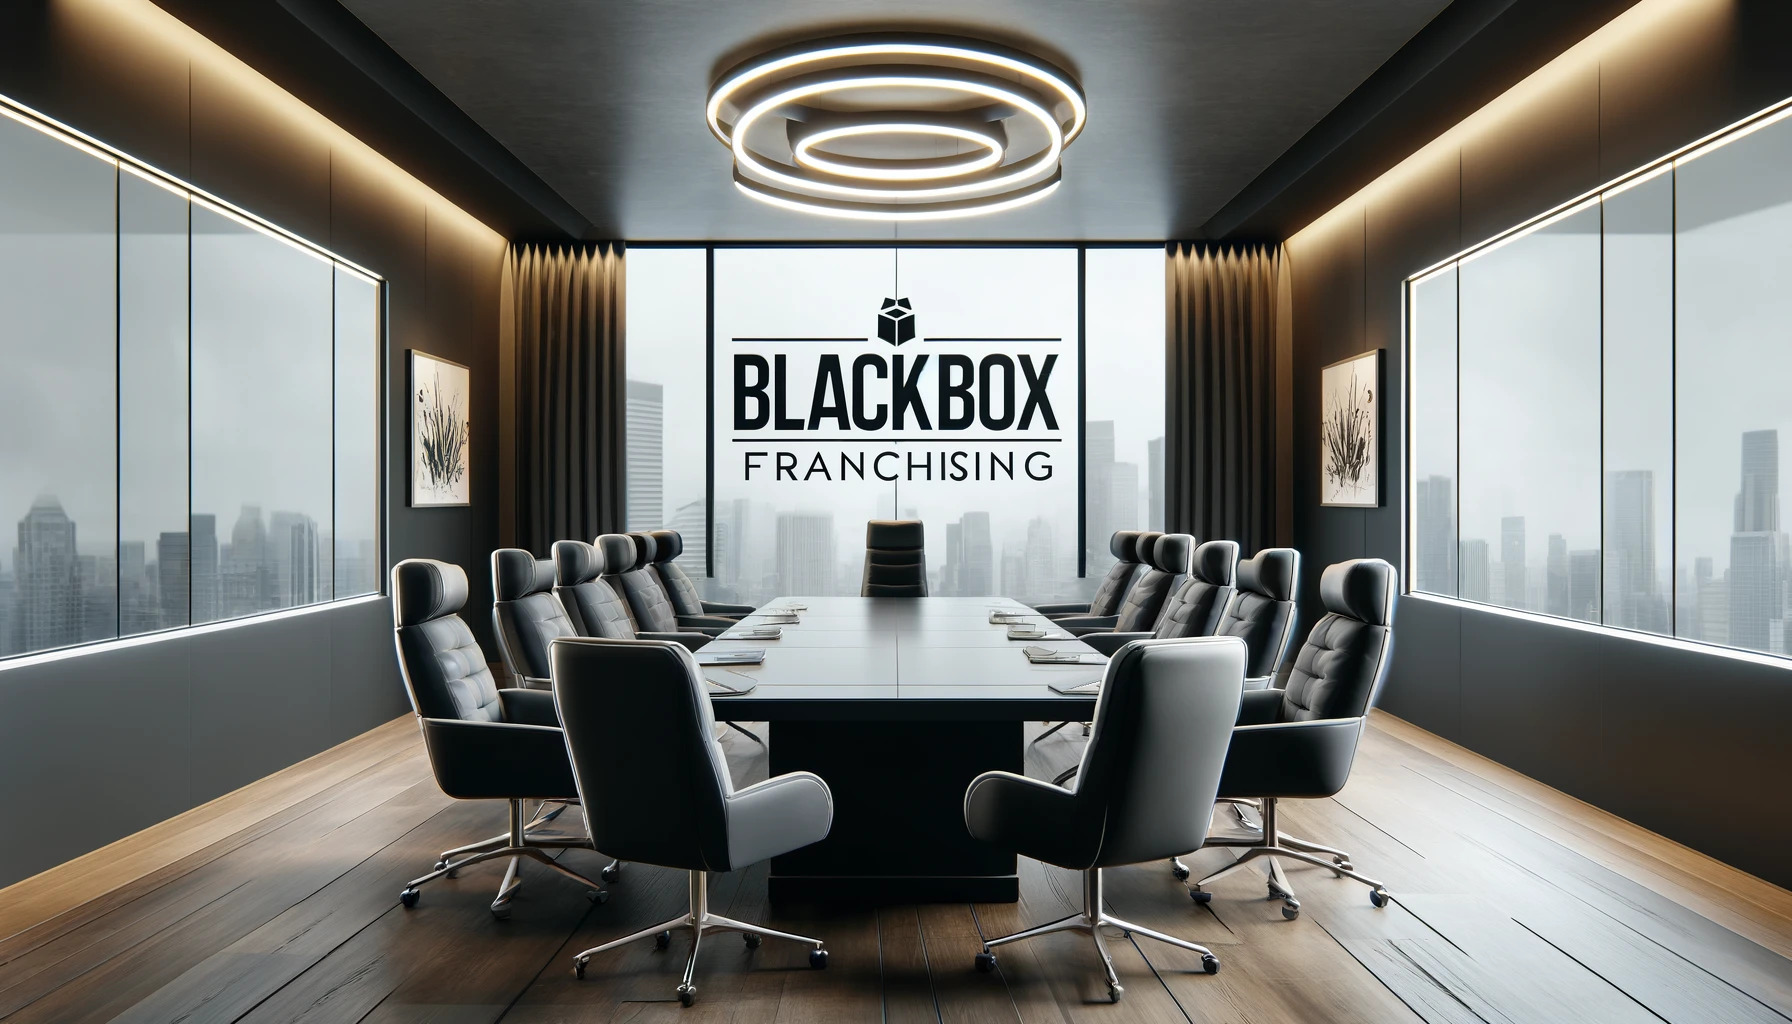 Black Box Franchising office image